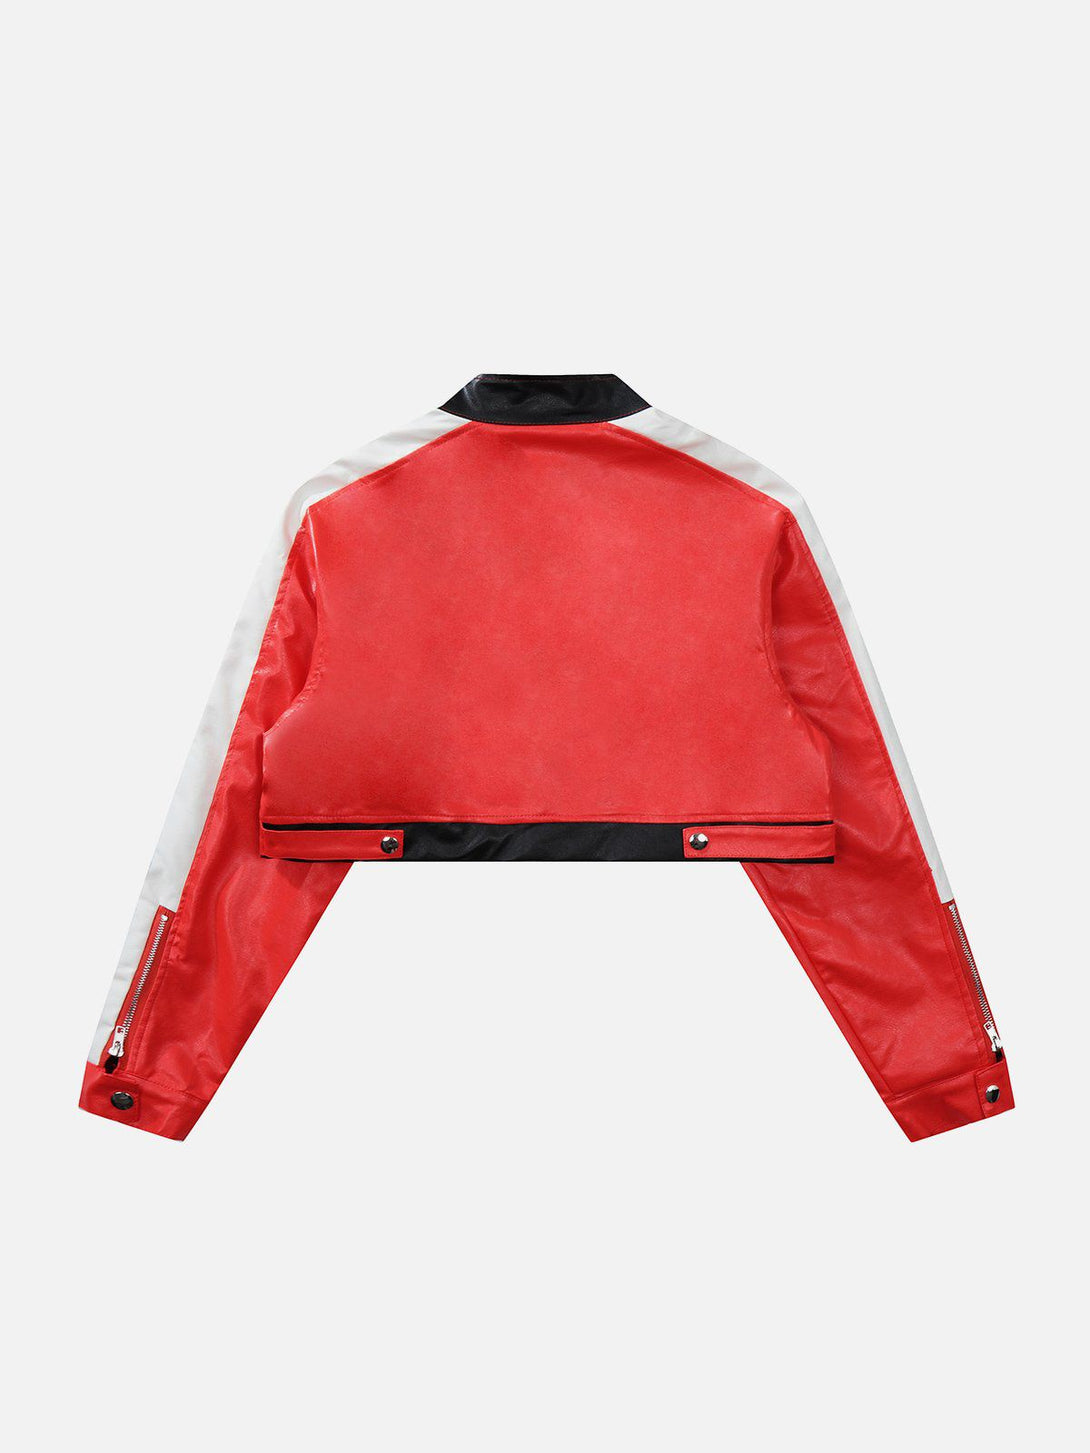 Levefly - Pu Leather Crop Motorcycle Jacket - Streetwear Fashion - levefly.com